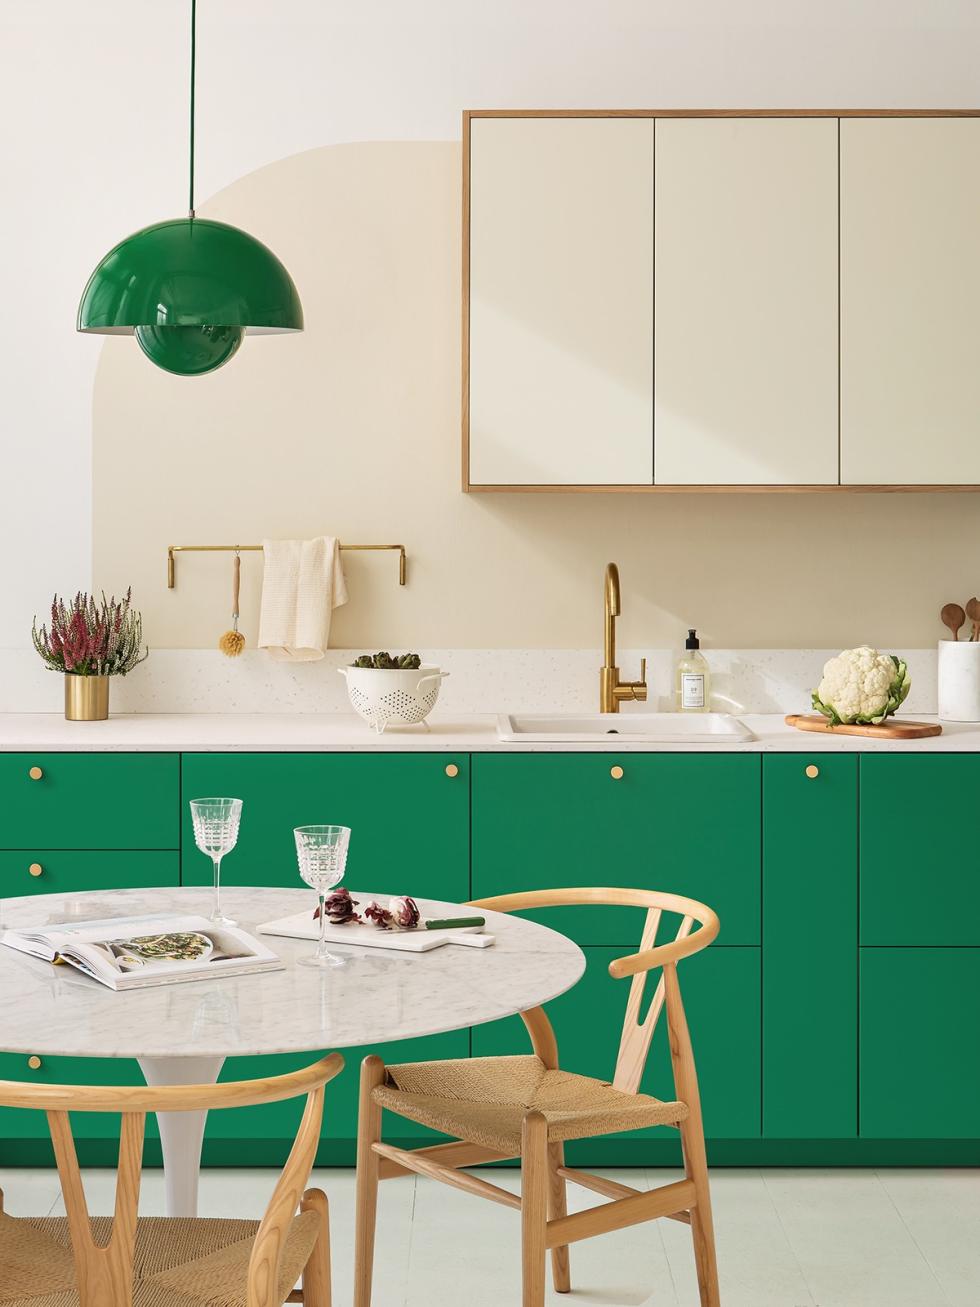 Leaf kitchen designed by Plum Living studio - ⓒ Hervé Goluza for Plum Living